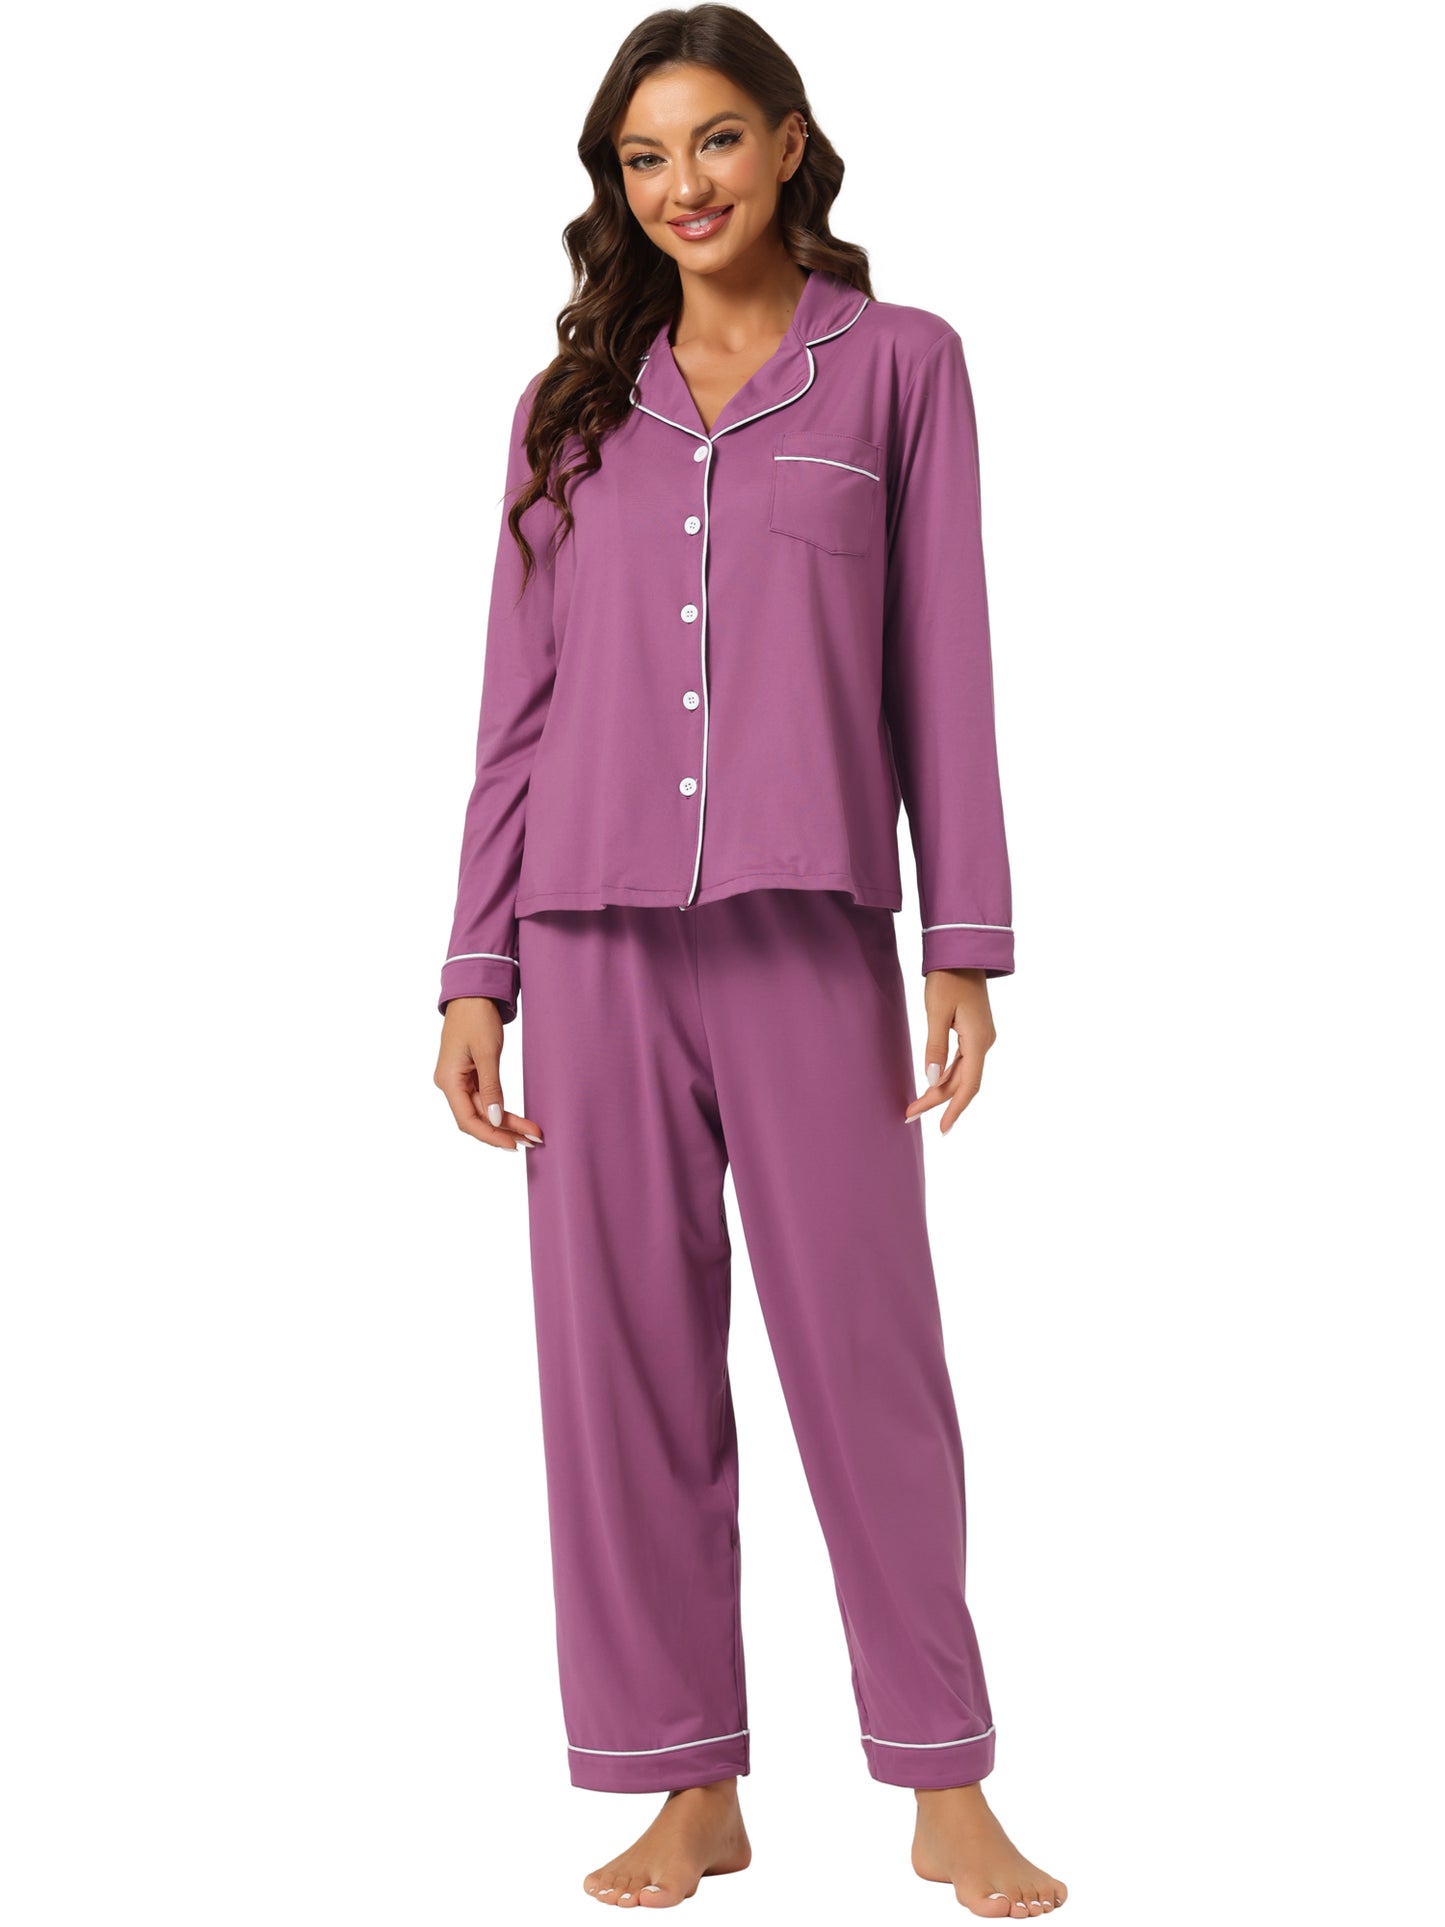 cheibear Pajama Sleep Shirt Nightwear Sleepwear Lounge Modal Pj Sets Purple